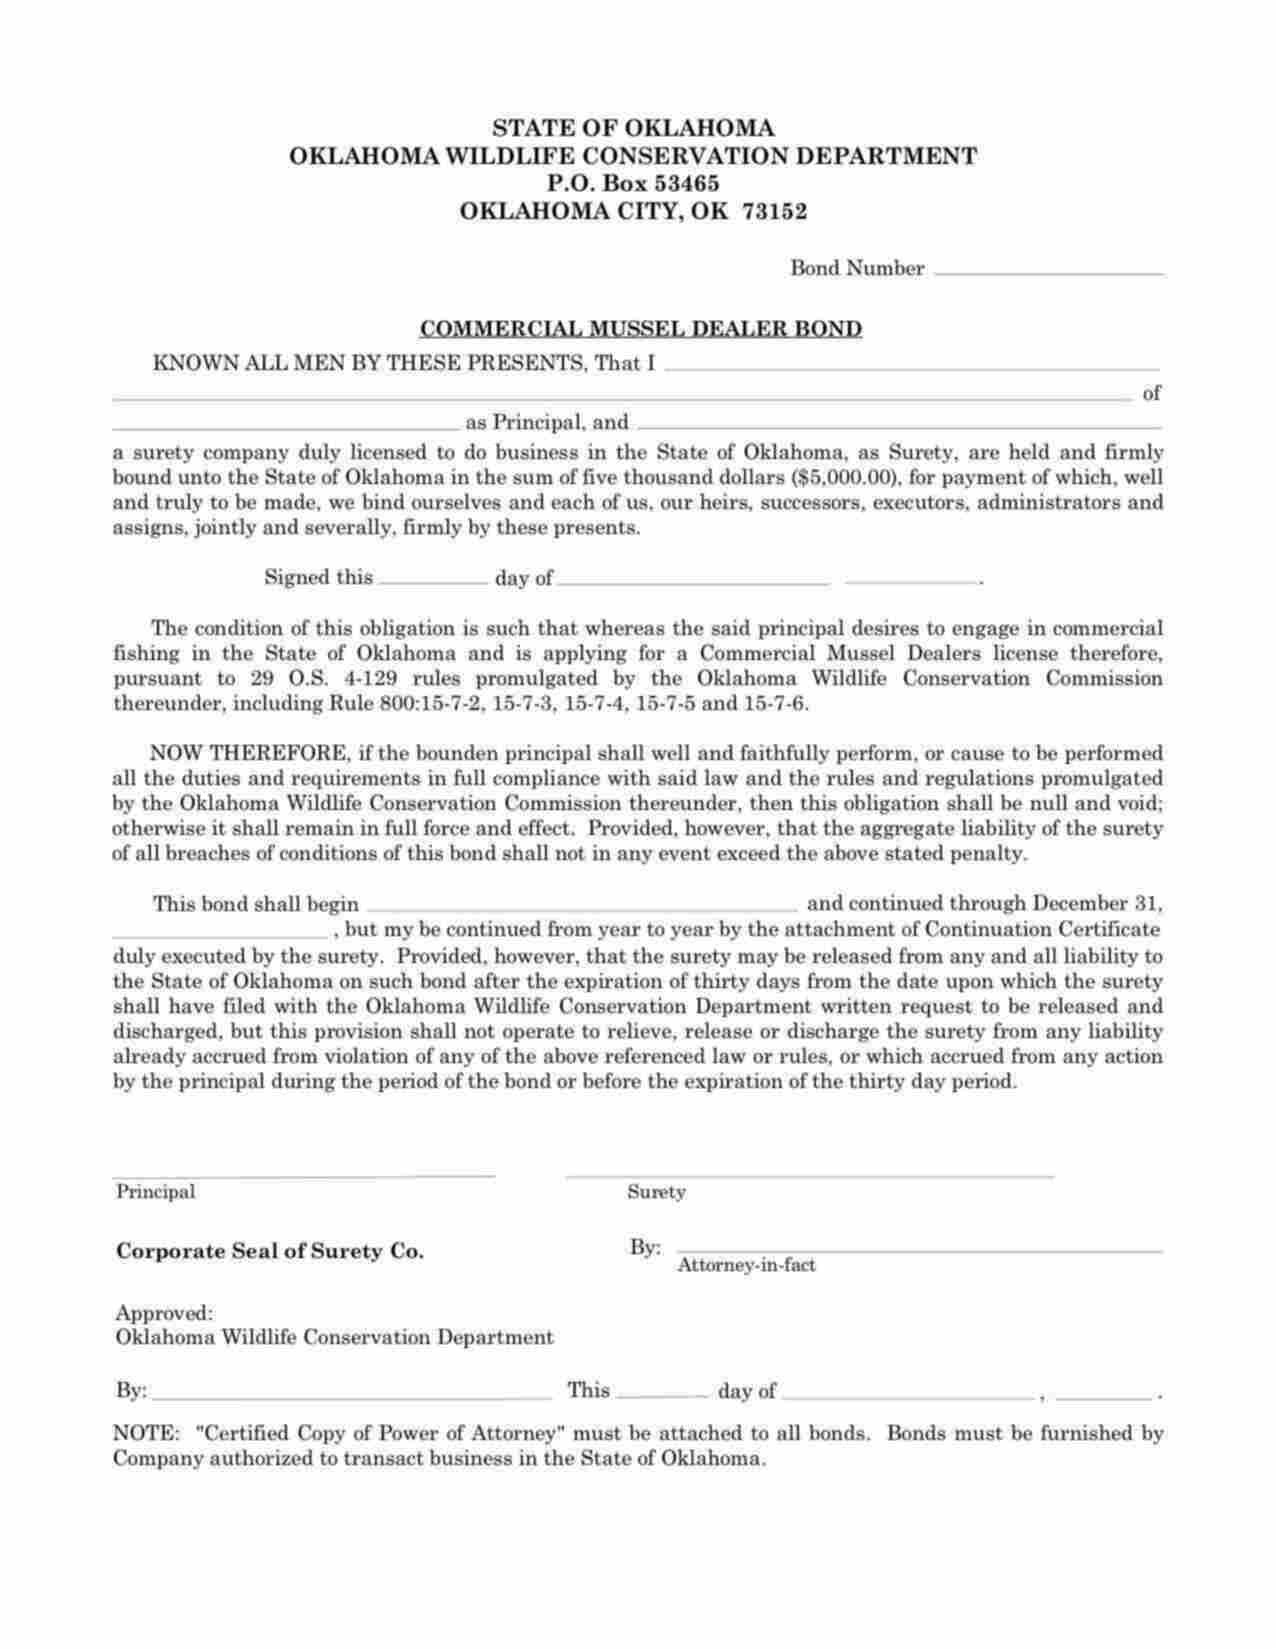 Oklahoma Commercial Mussel Dealer Bond Form